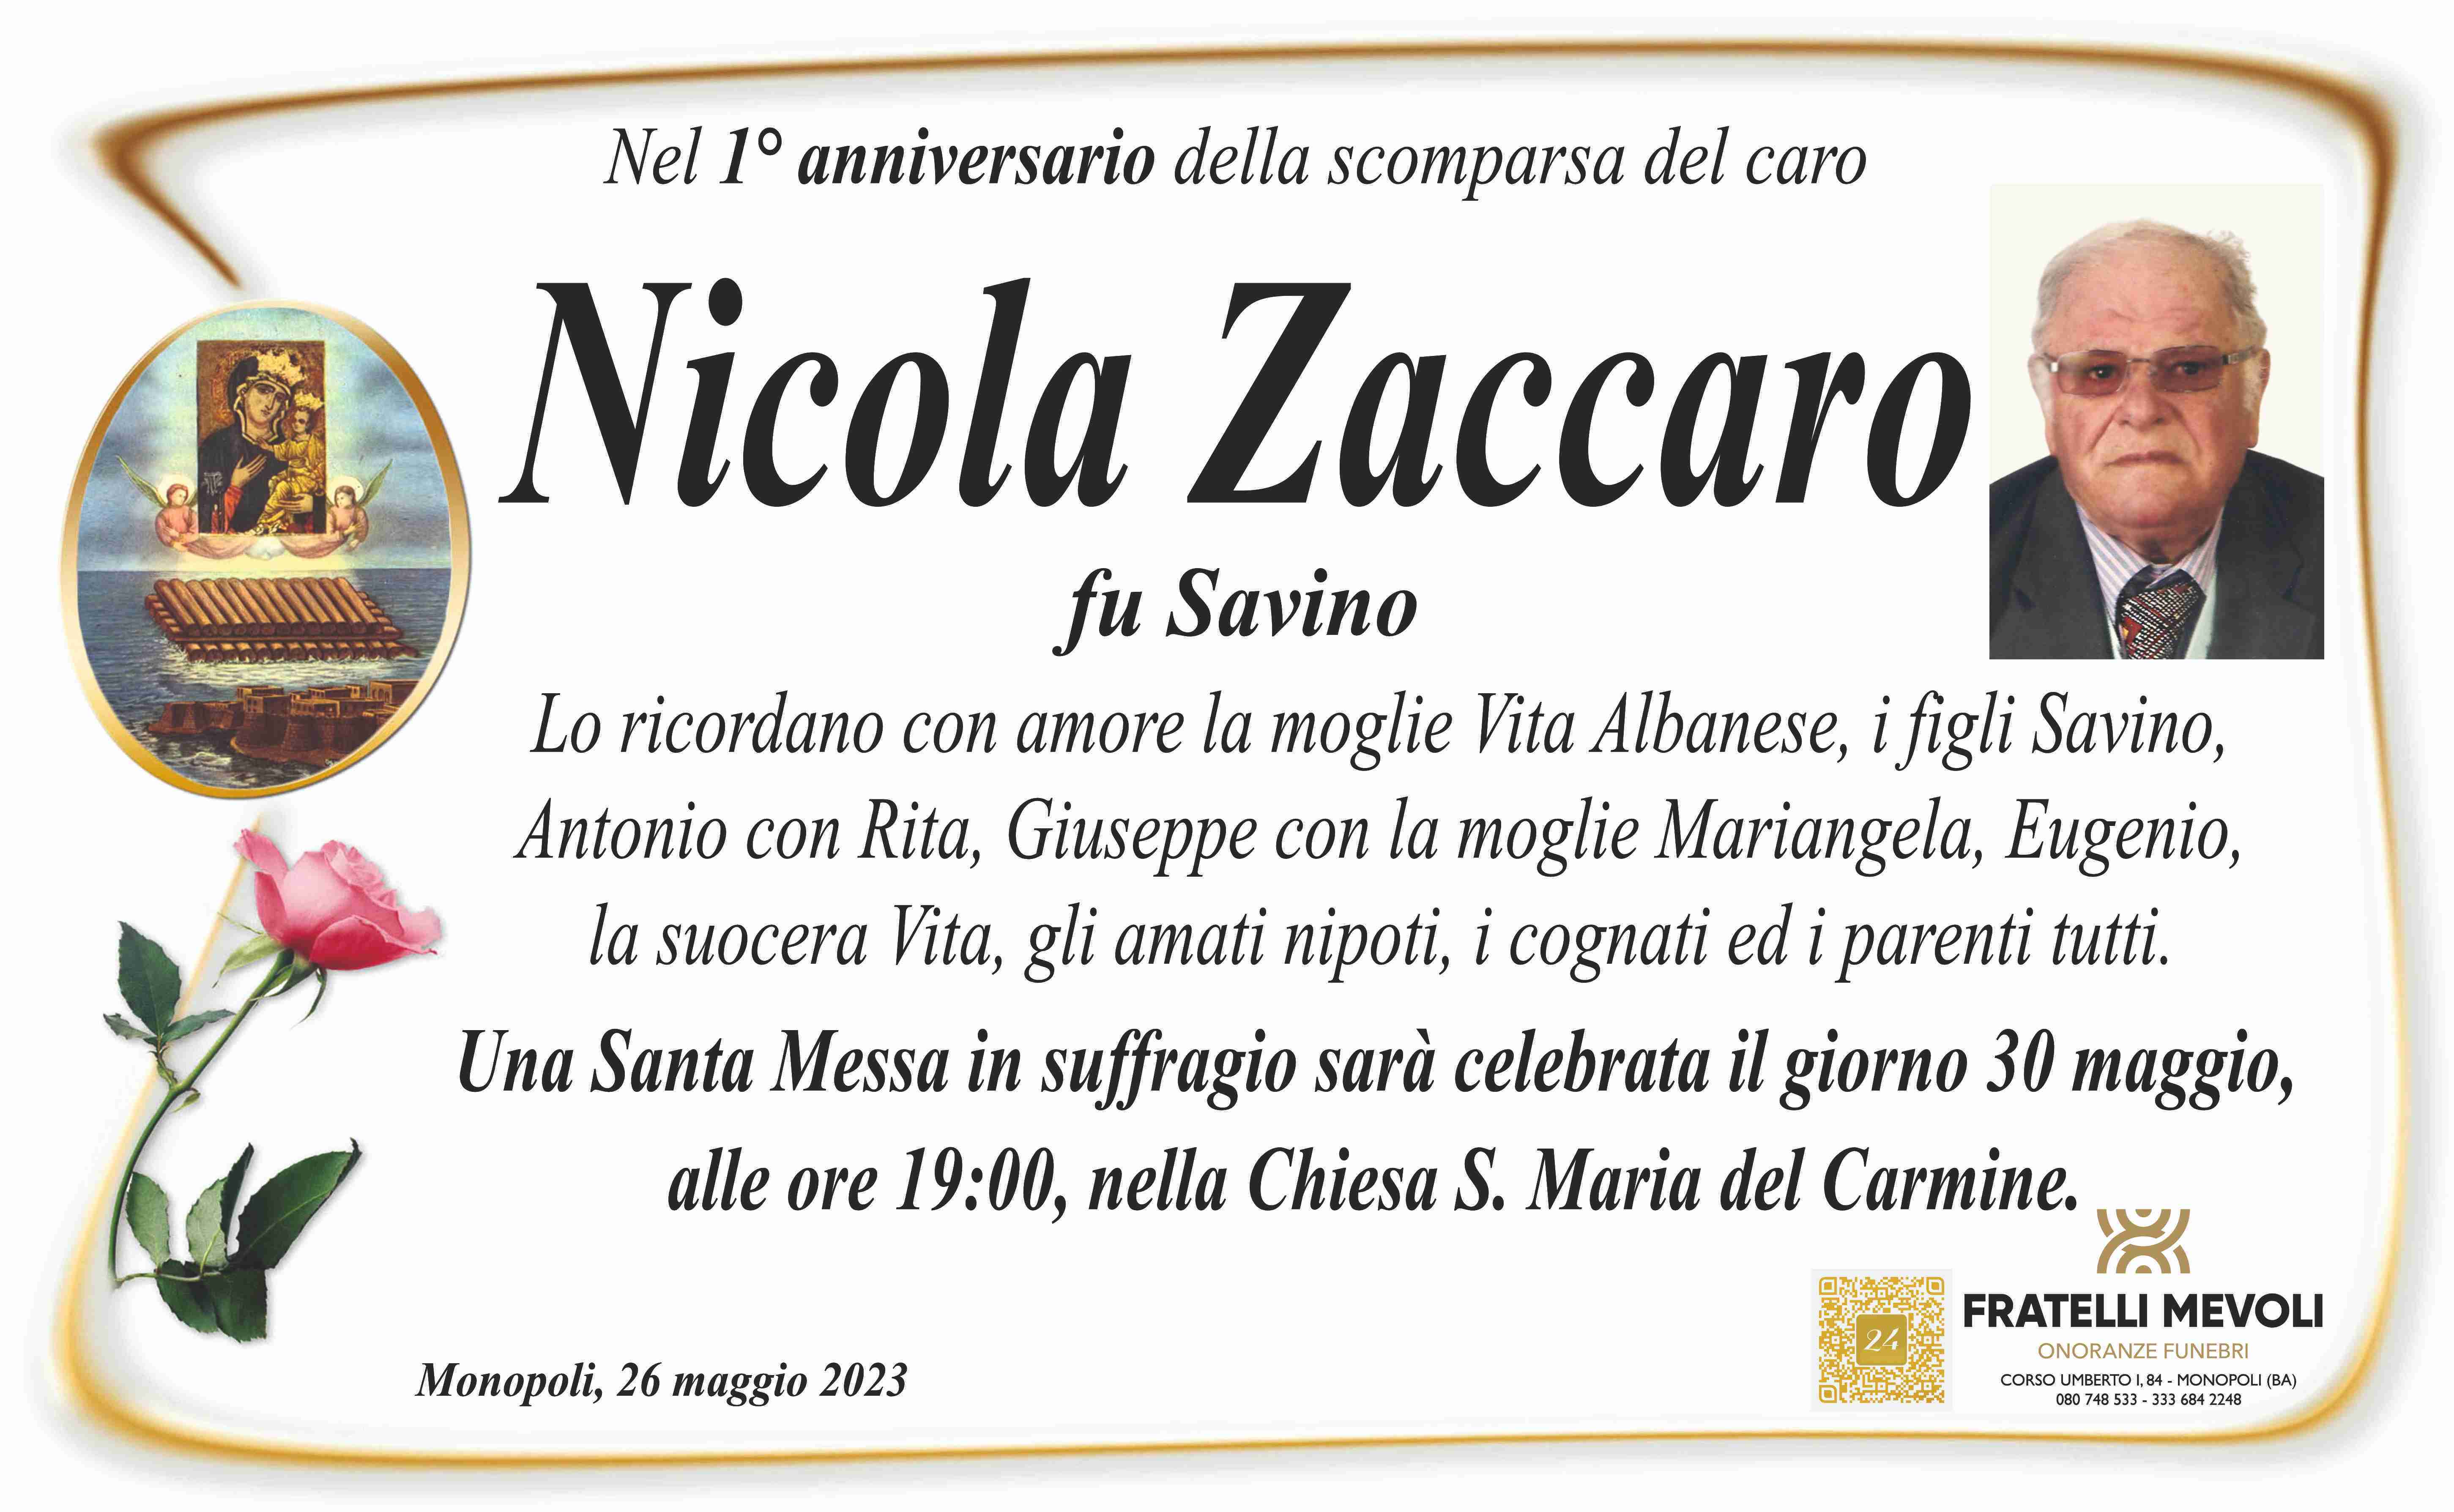 Nicola Zaccaro